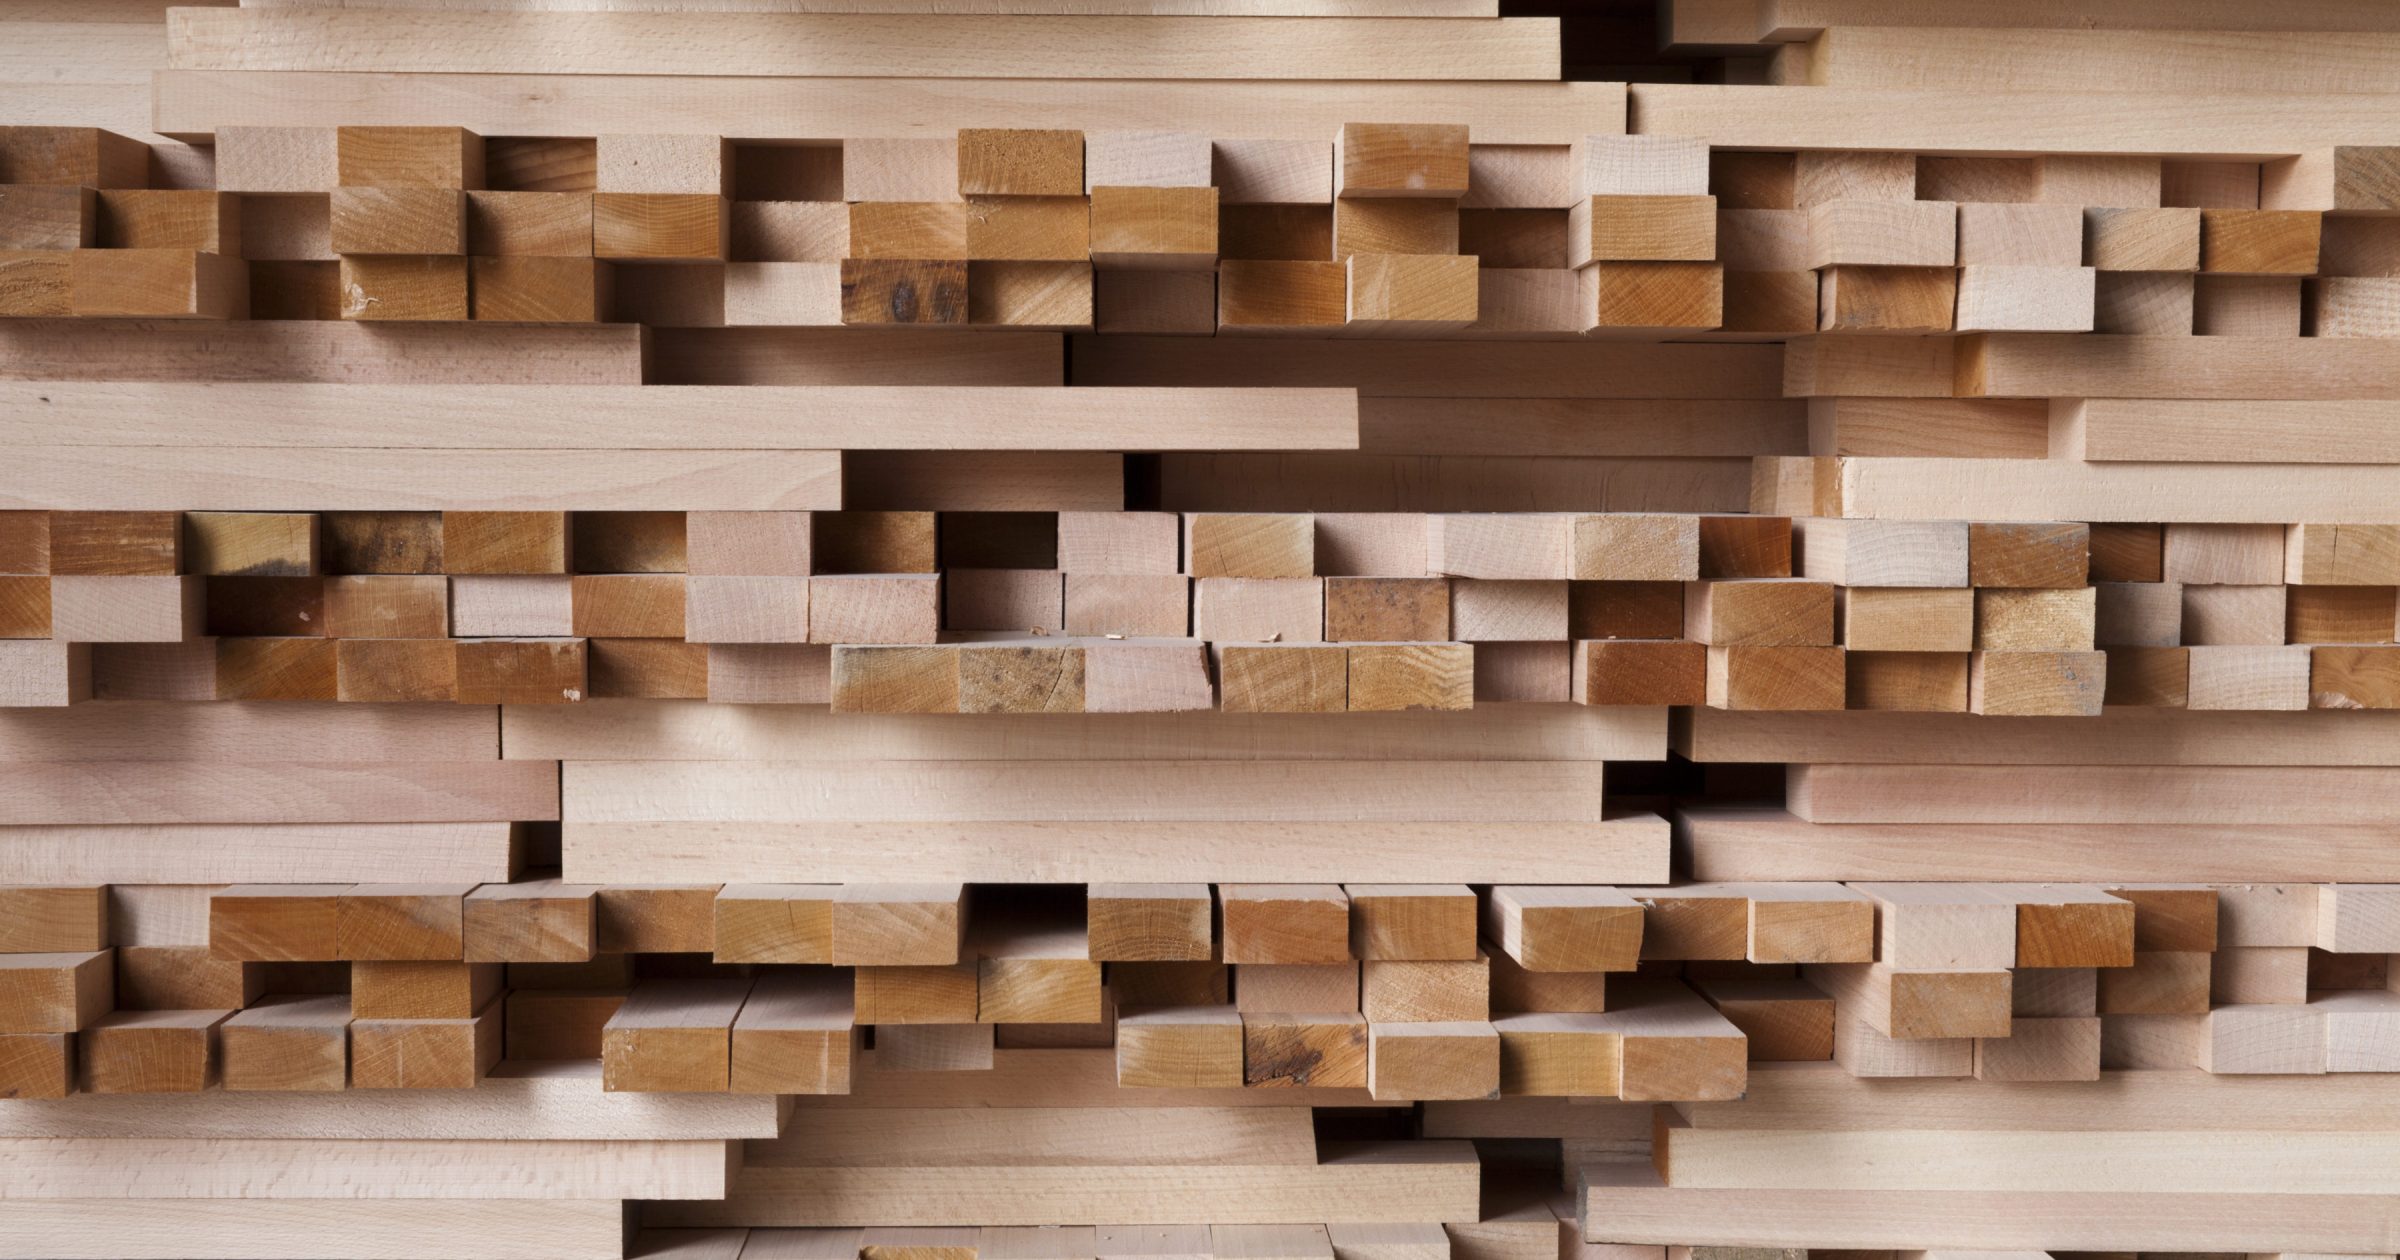 storage of wood